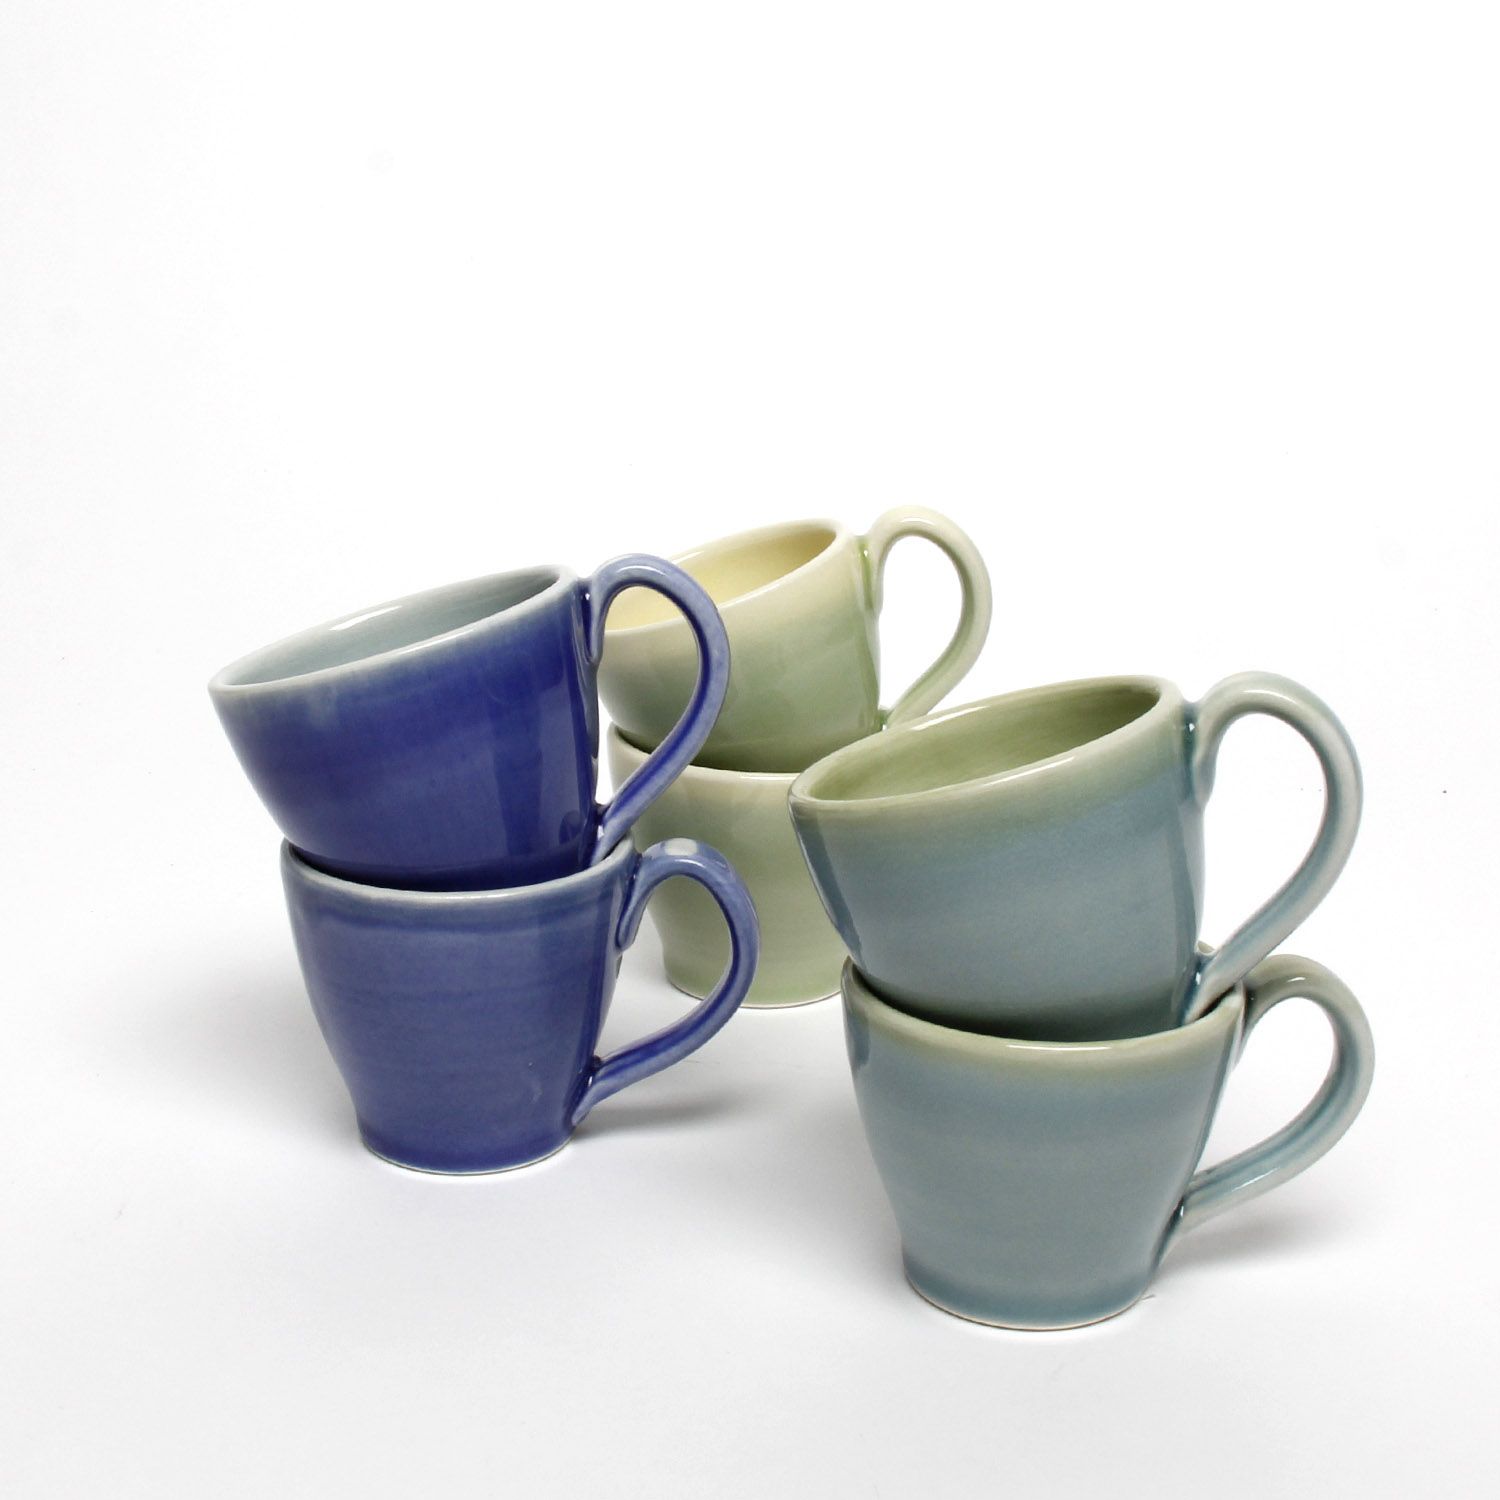 Thomas Aitken: Celadon Espresso Cup Product Image 2 of 3